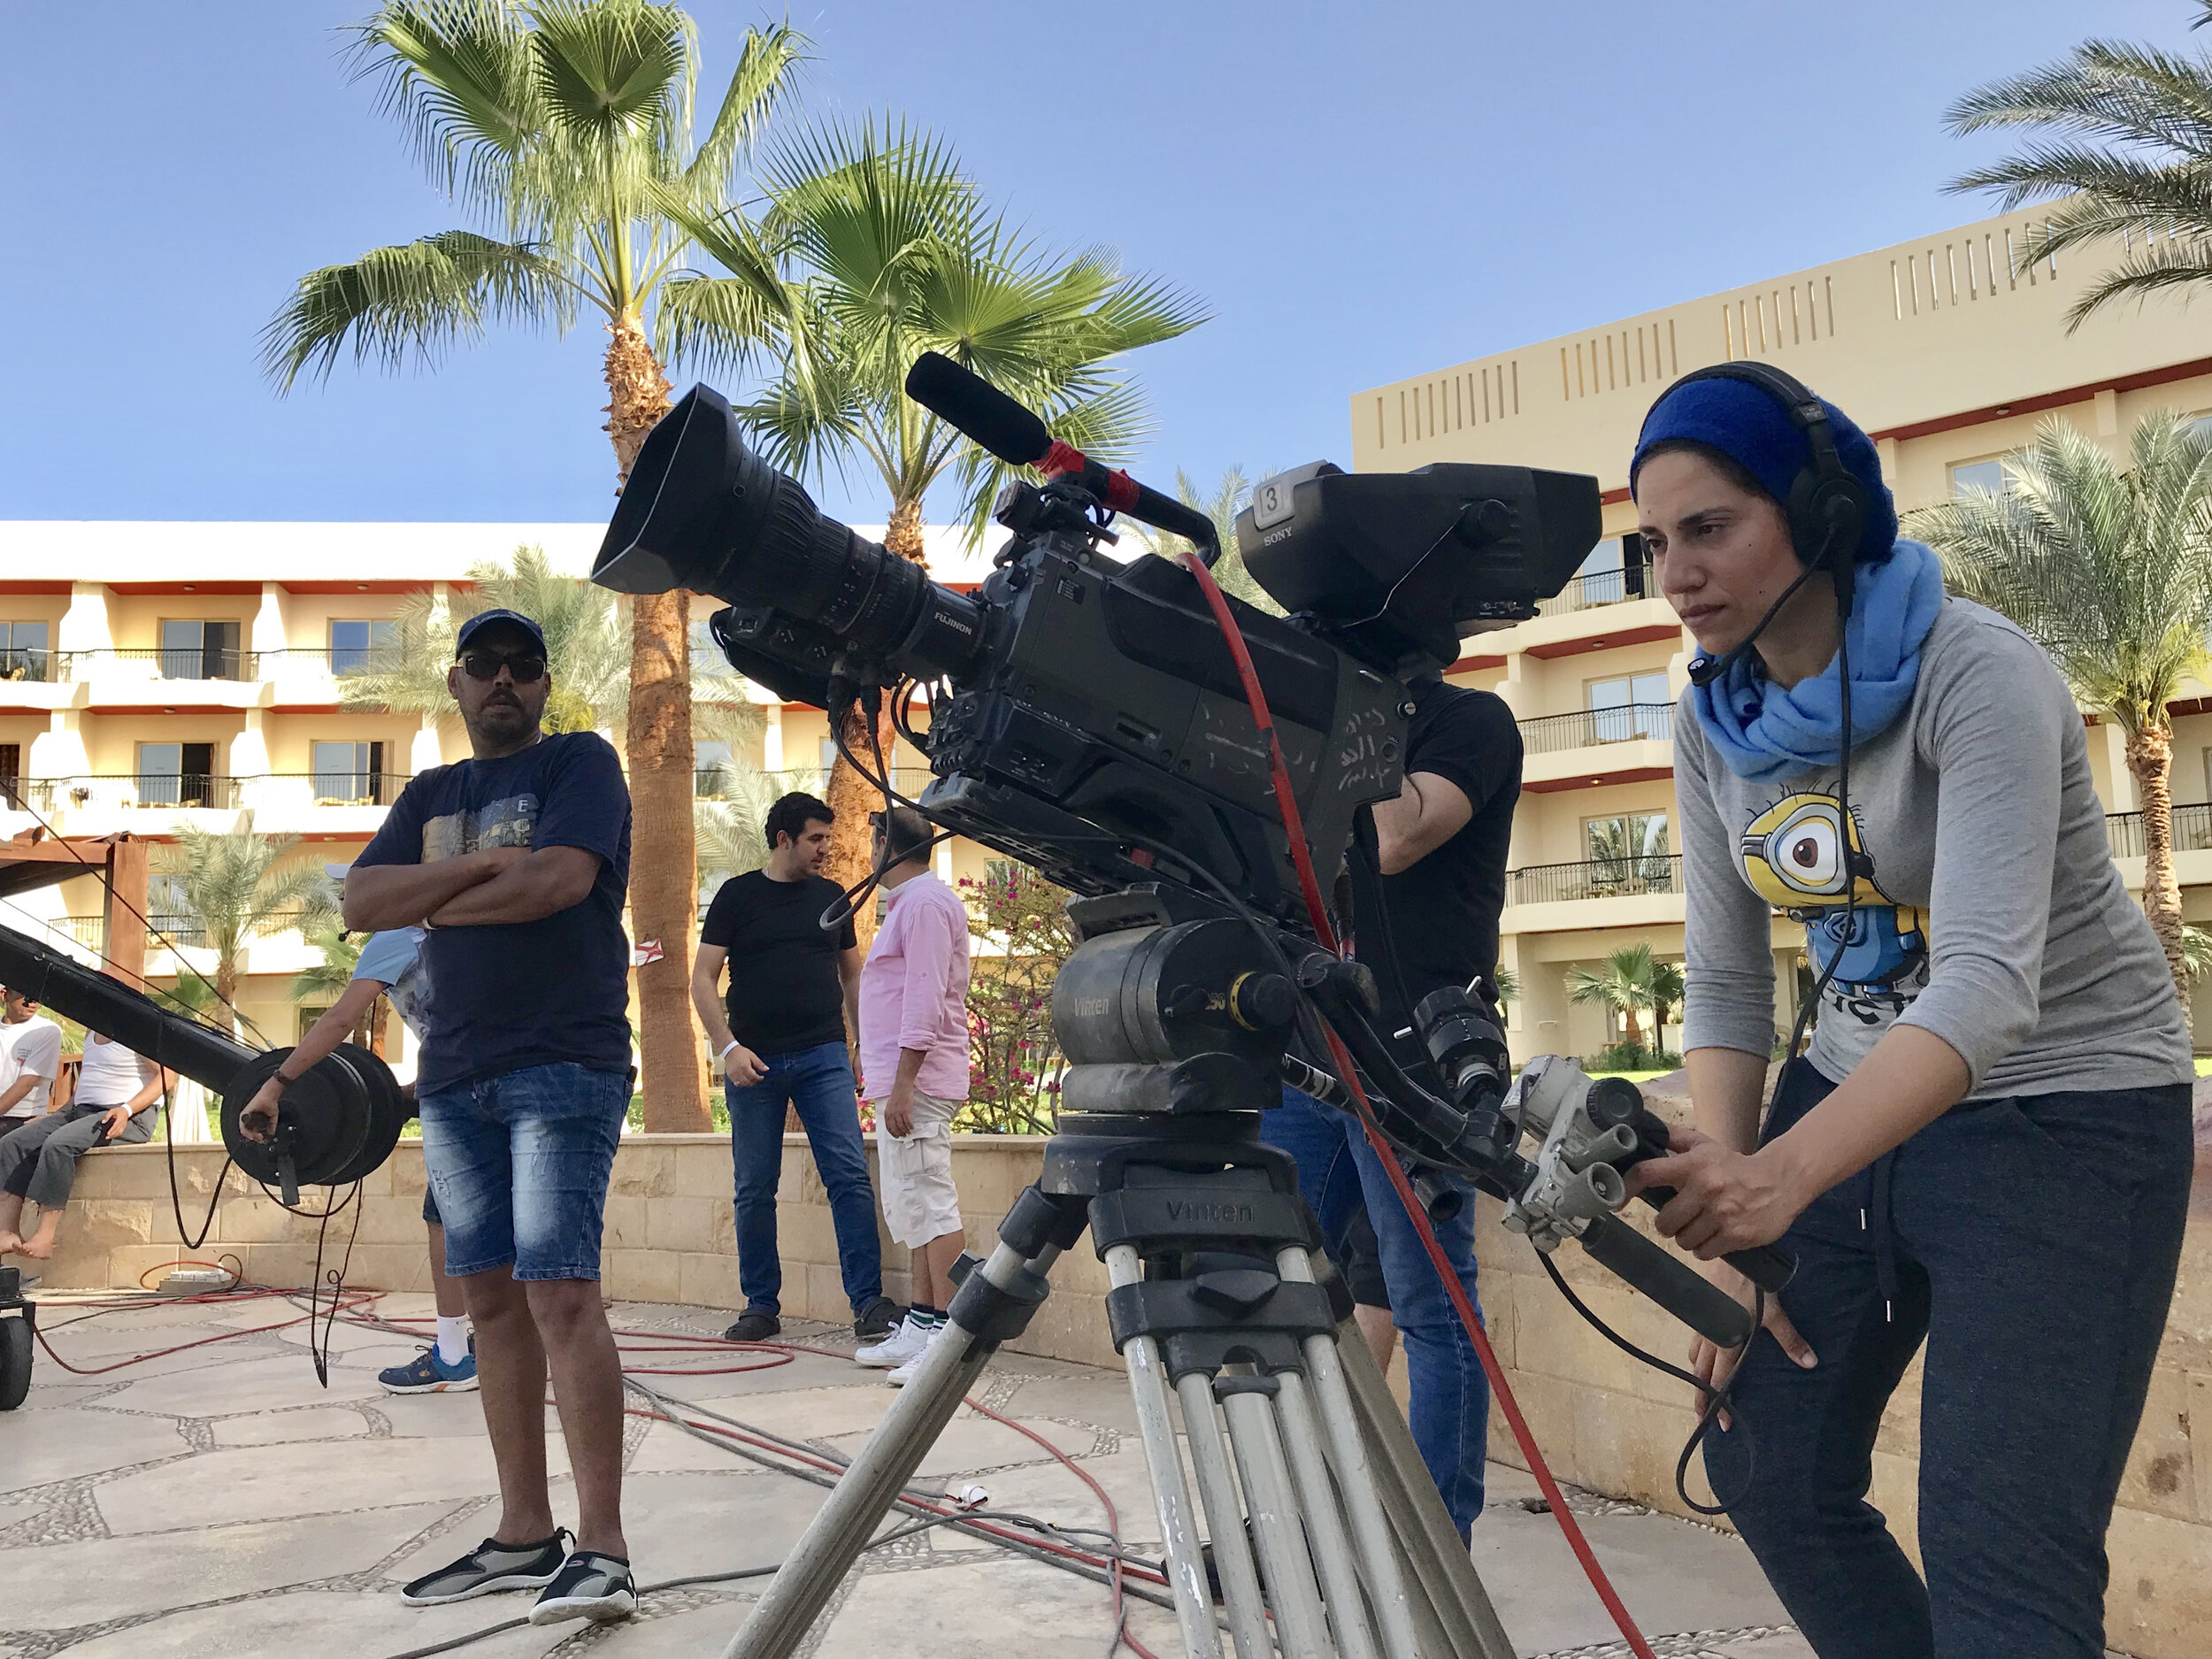  Female TV crew at Sharm El Sheikh Film Festival 